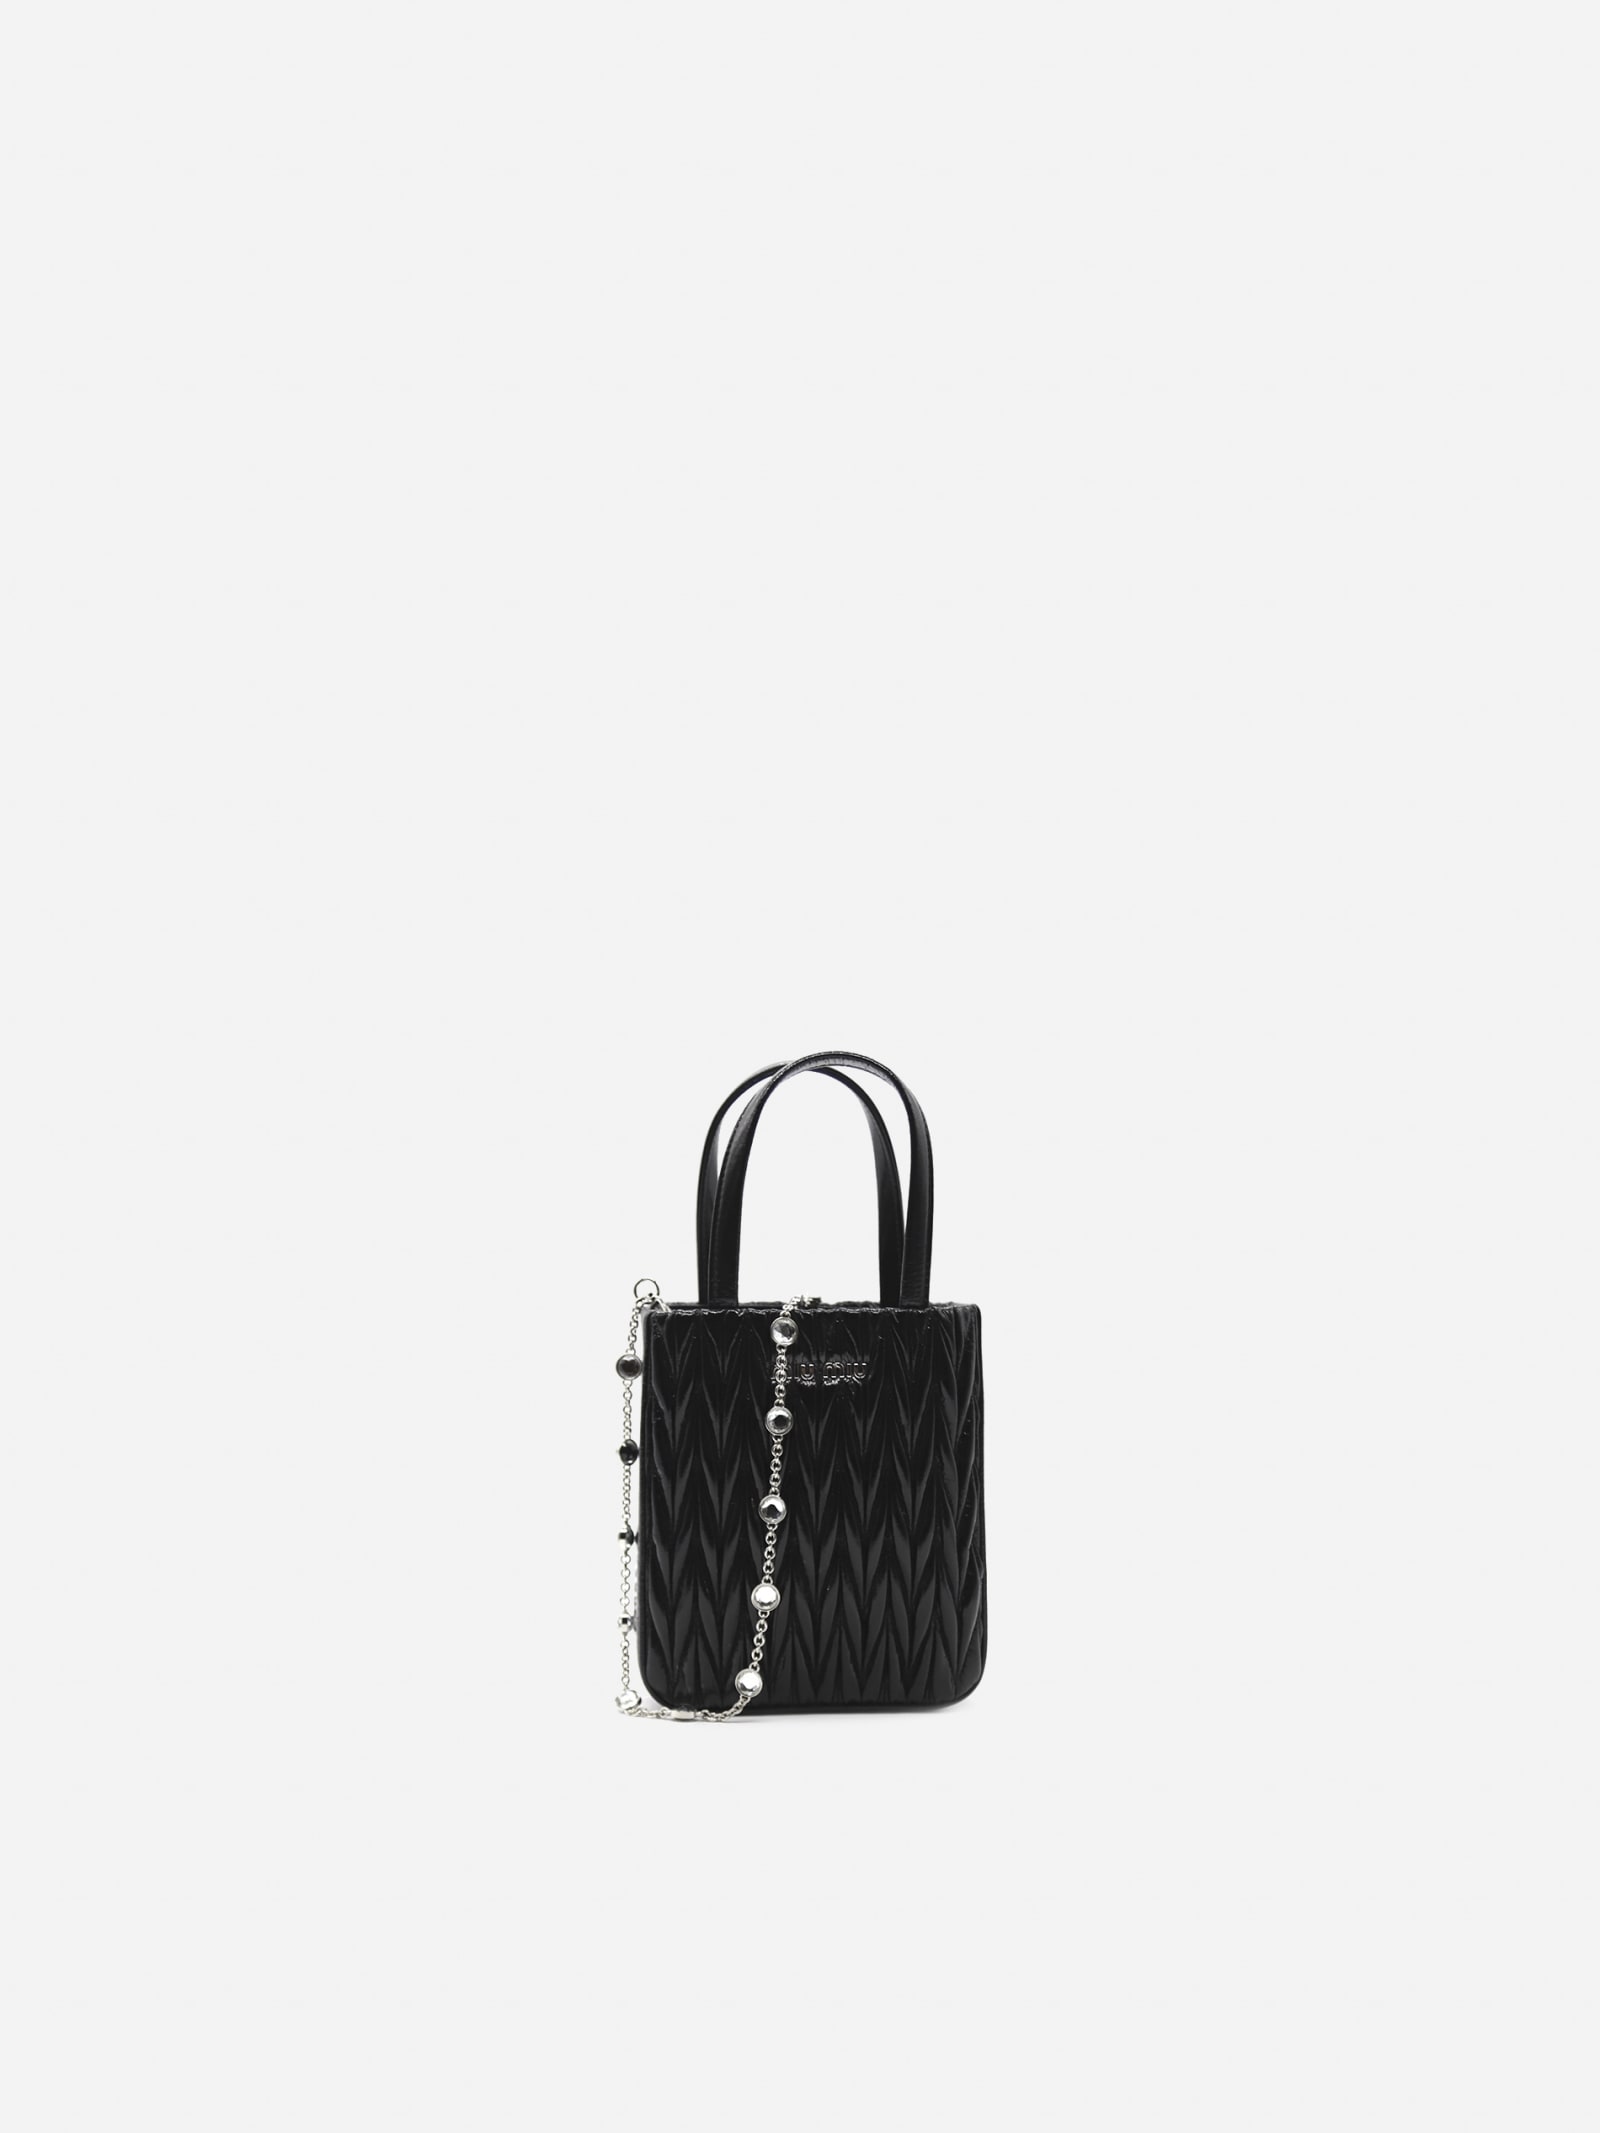 Miu Miu Handbag In Quilted Nappa Leather